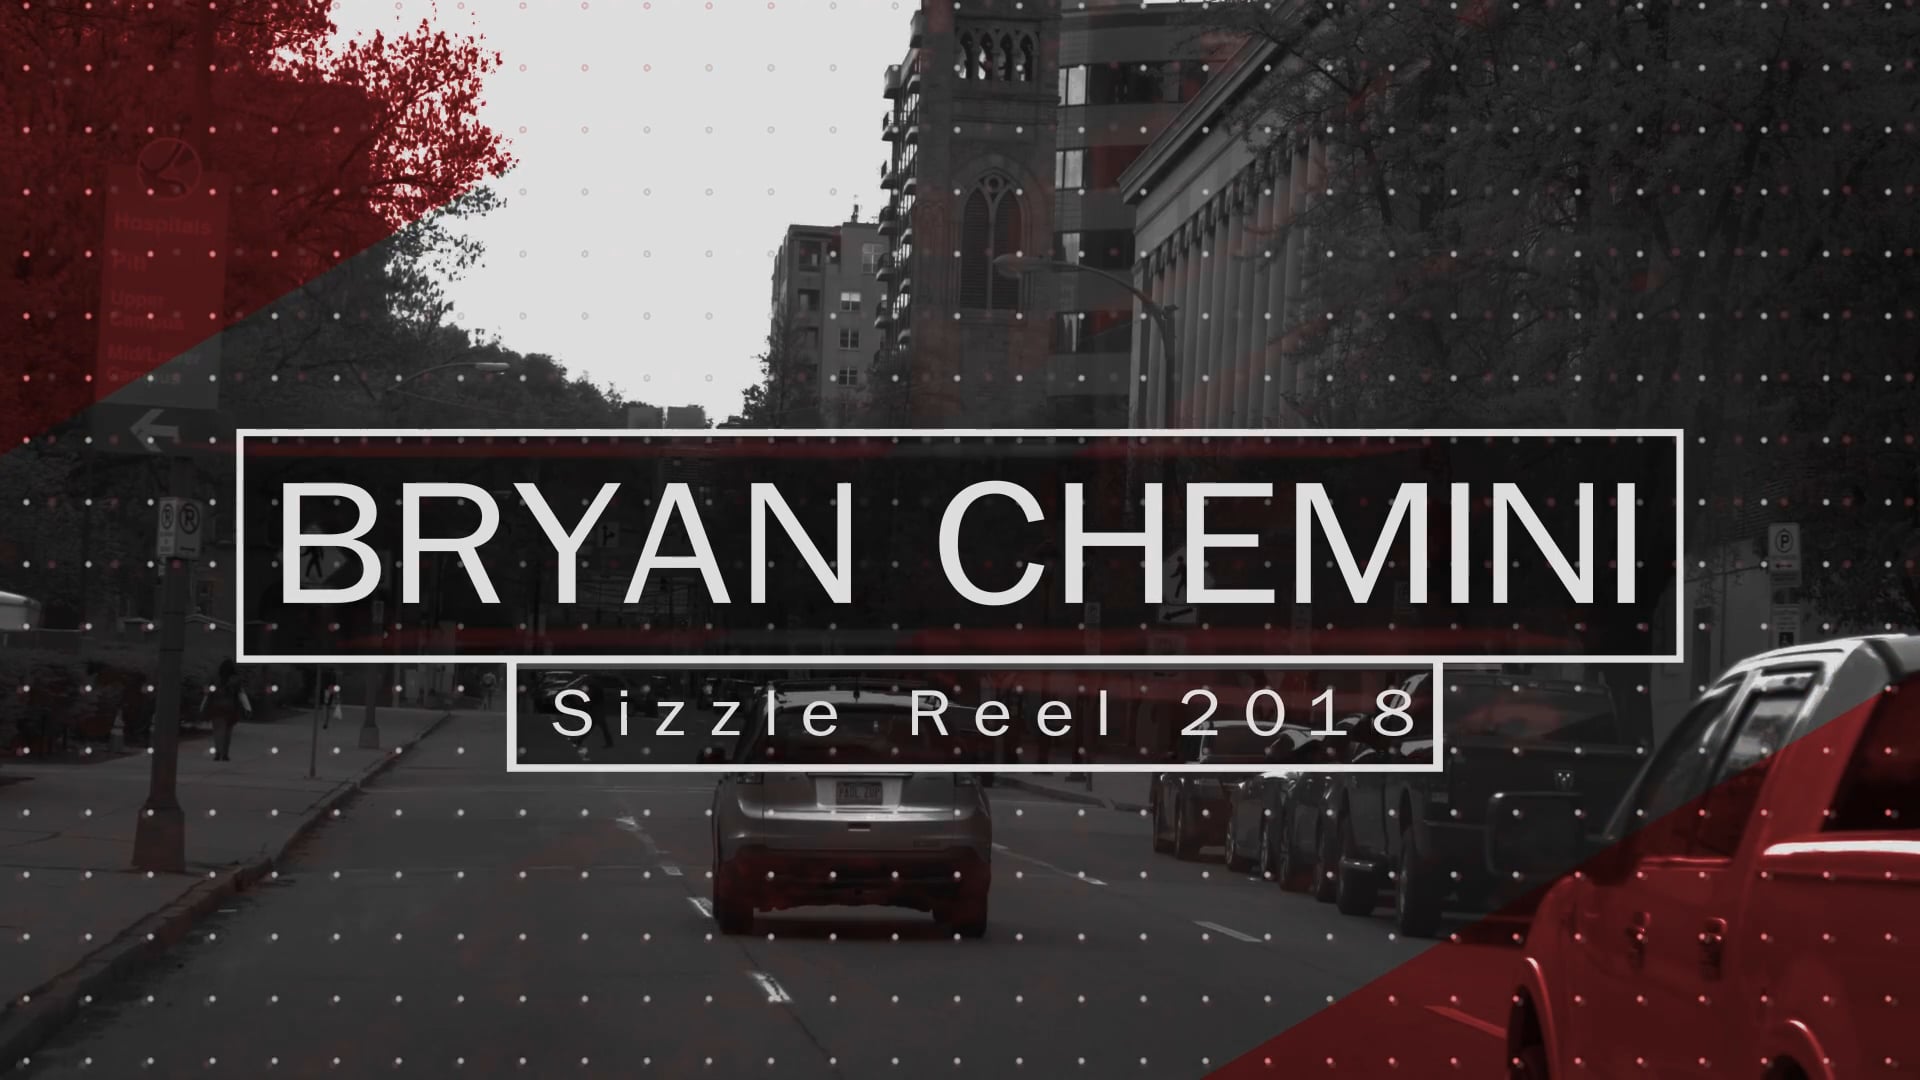 Bryan Chemini's Sizzle Reel